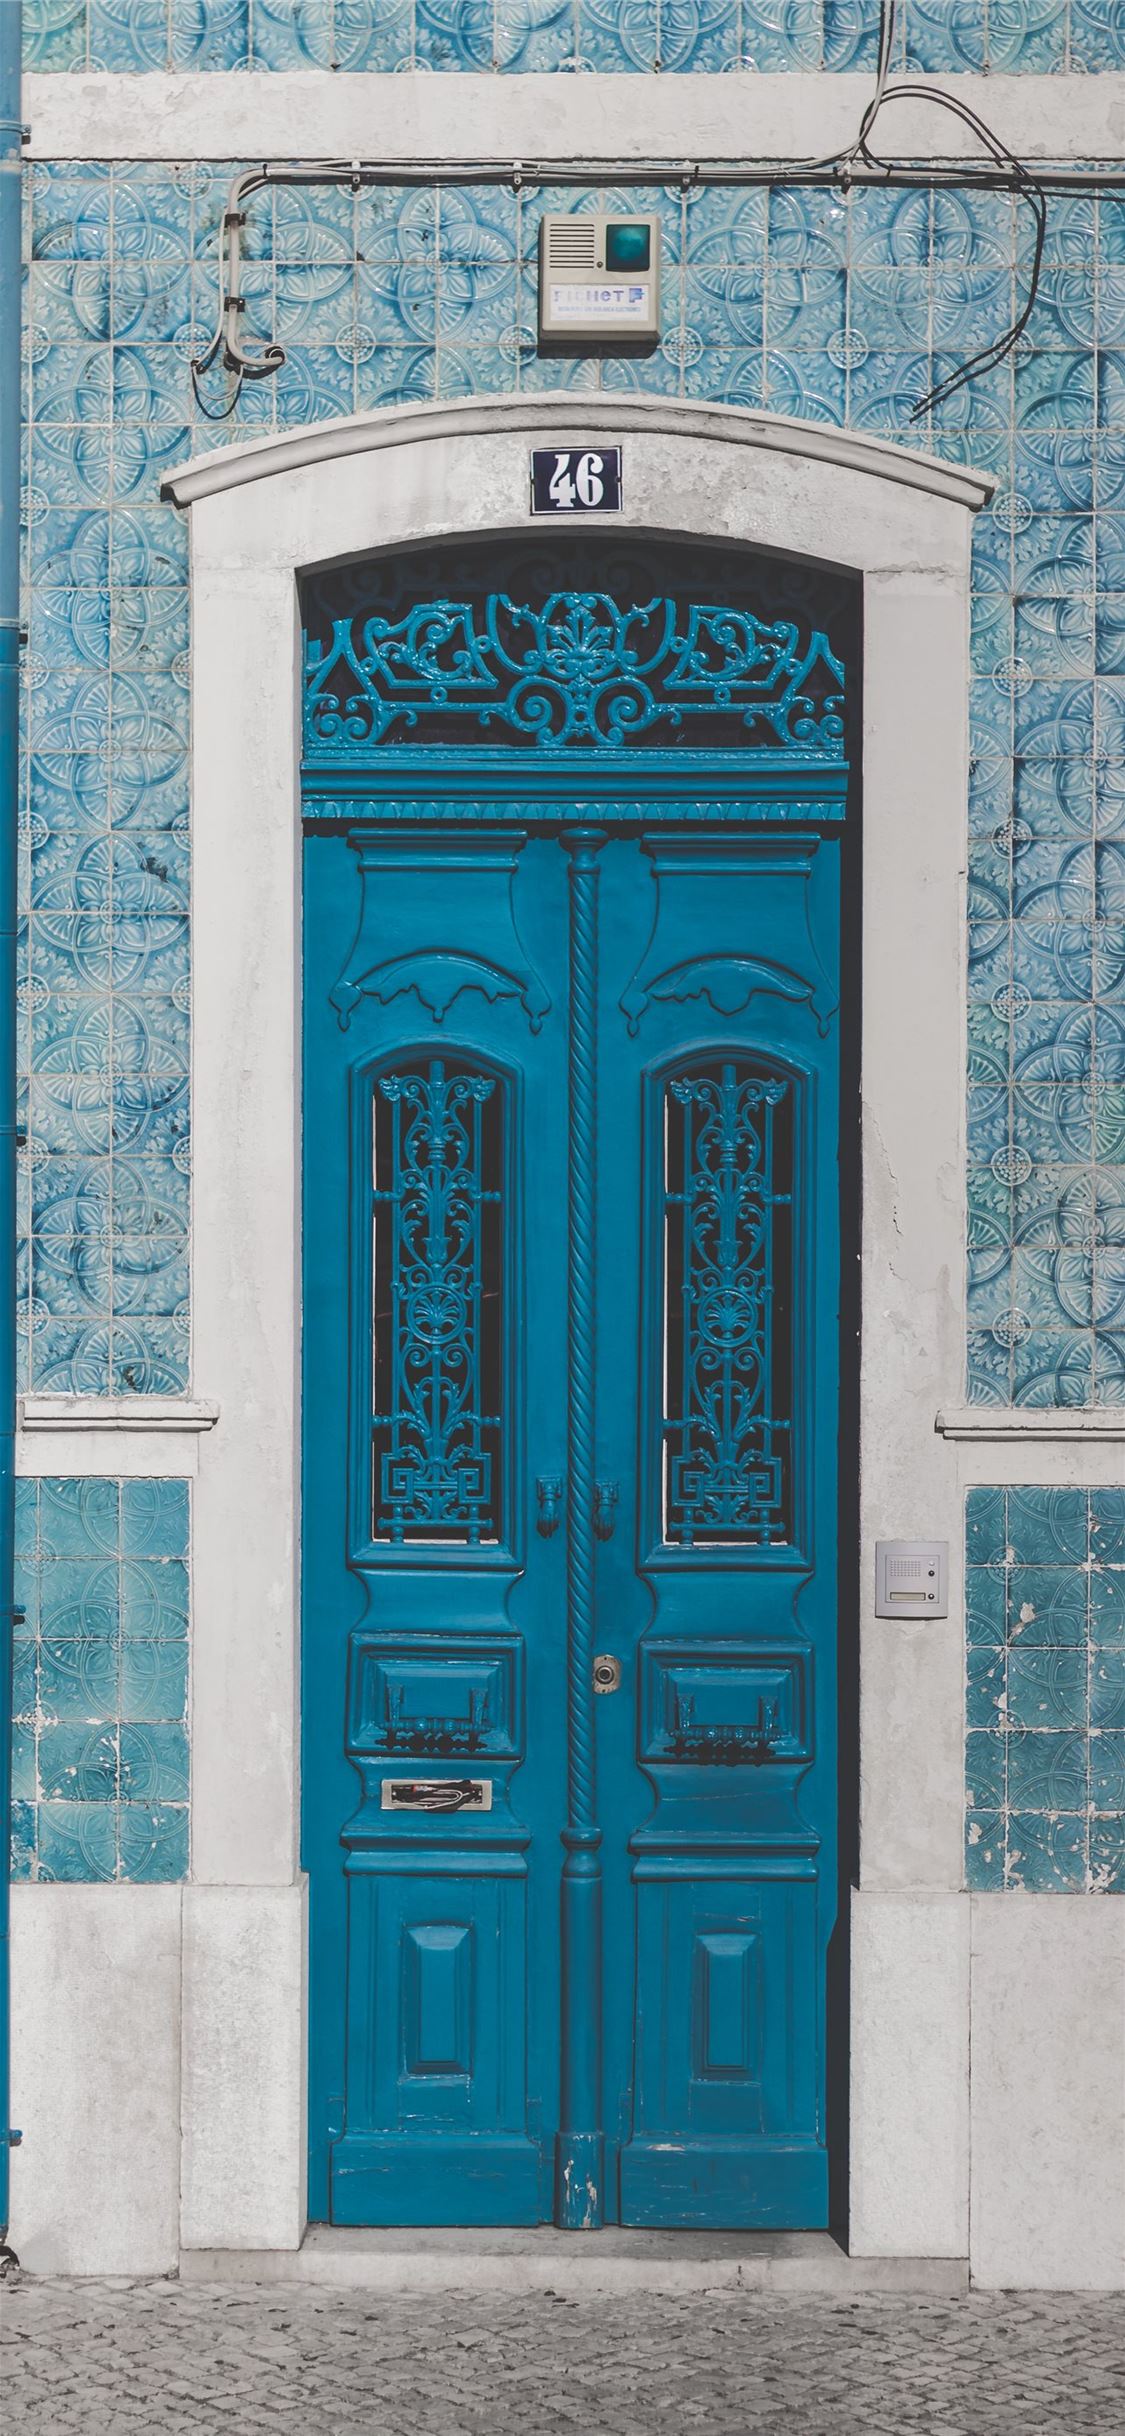 blue wooden door closed with 46 sign iPhone X wallpaper 